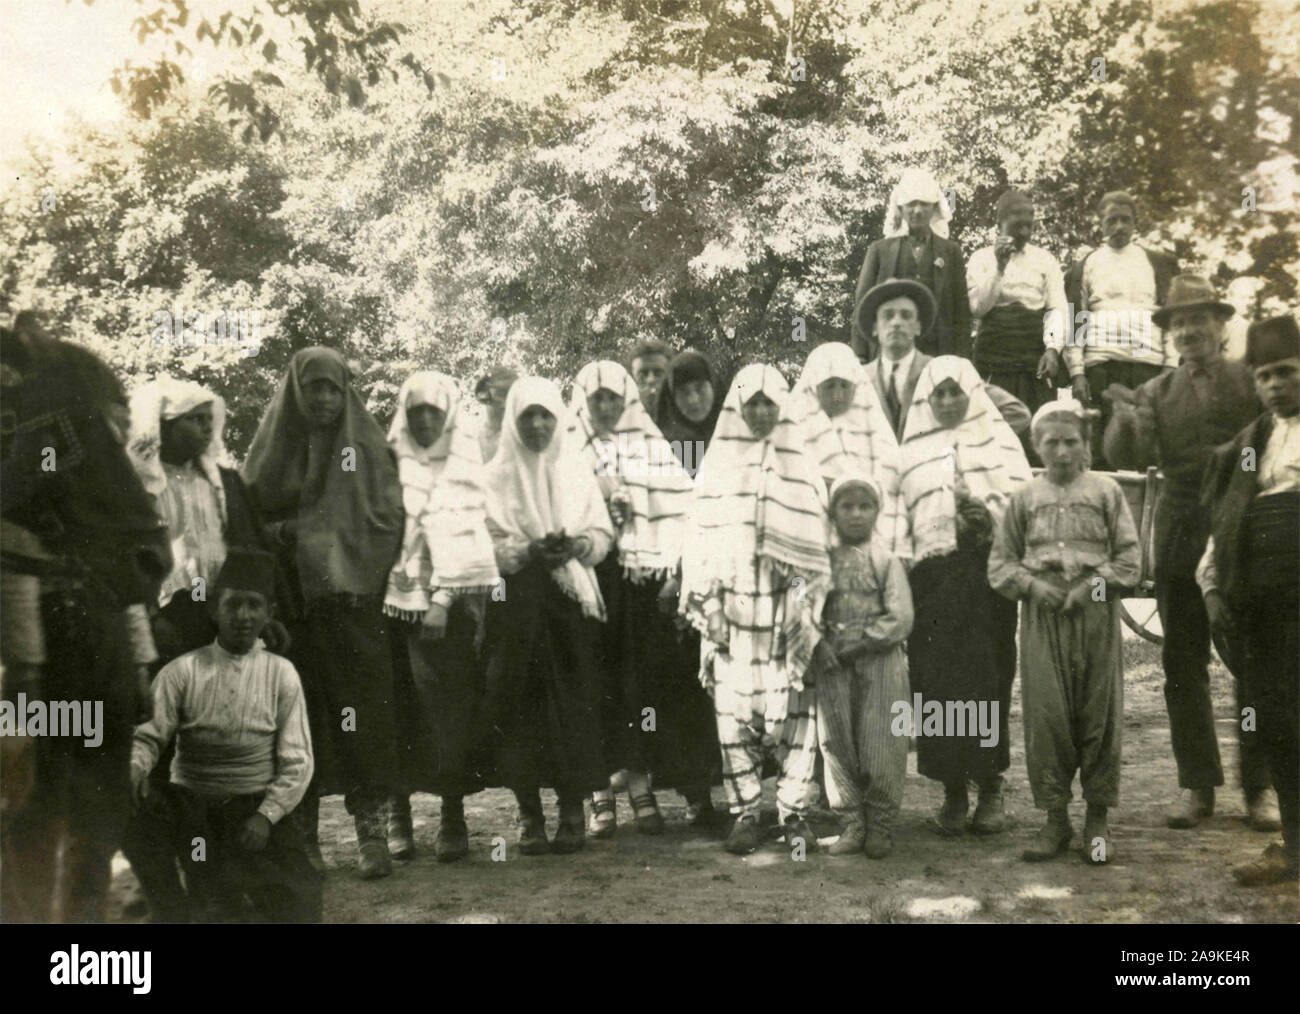 Grupo de mujeres musulmanas con un pañuelo blanco con rayas negras Foto de stock